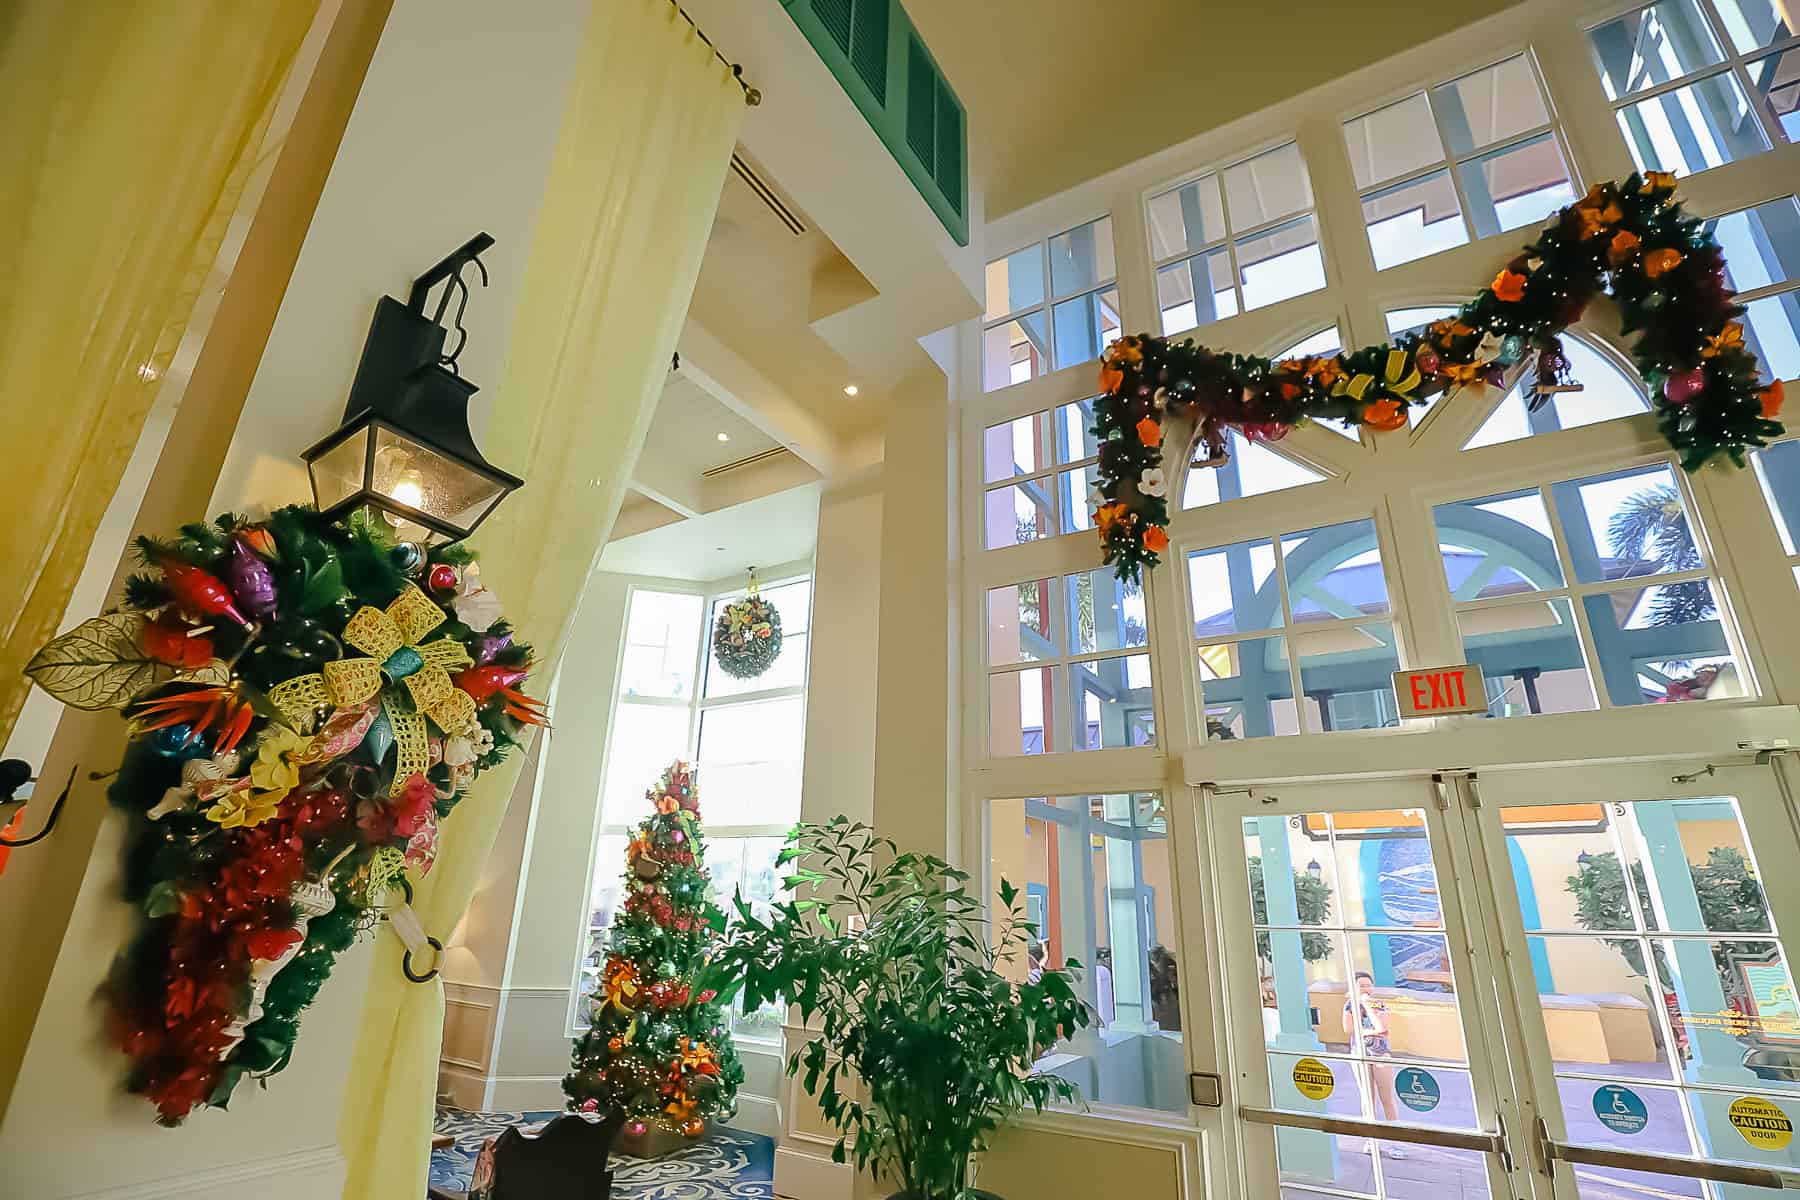 Disney's Caribbean Resort decorations for the Christmas season. 